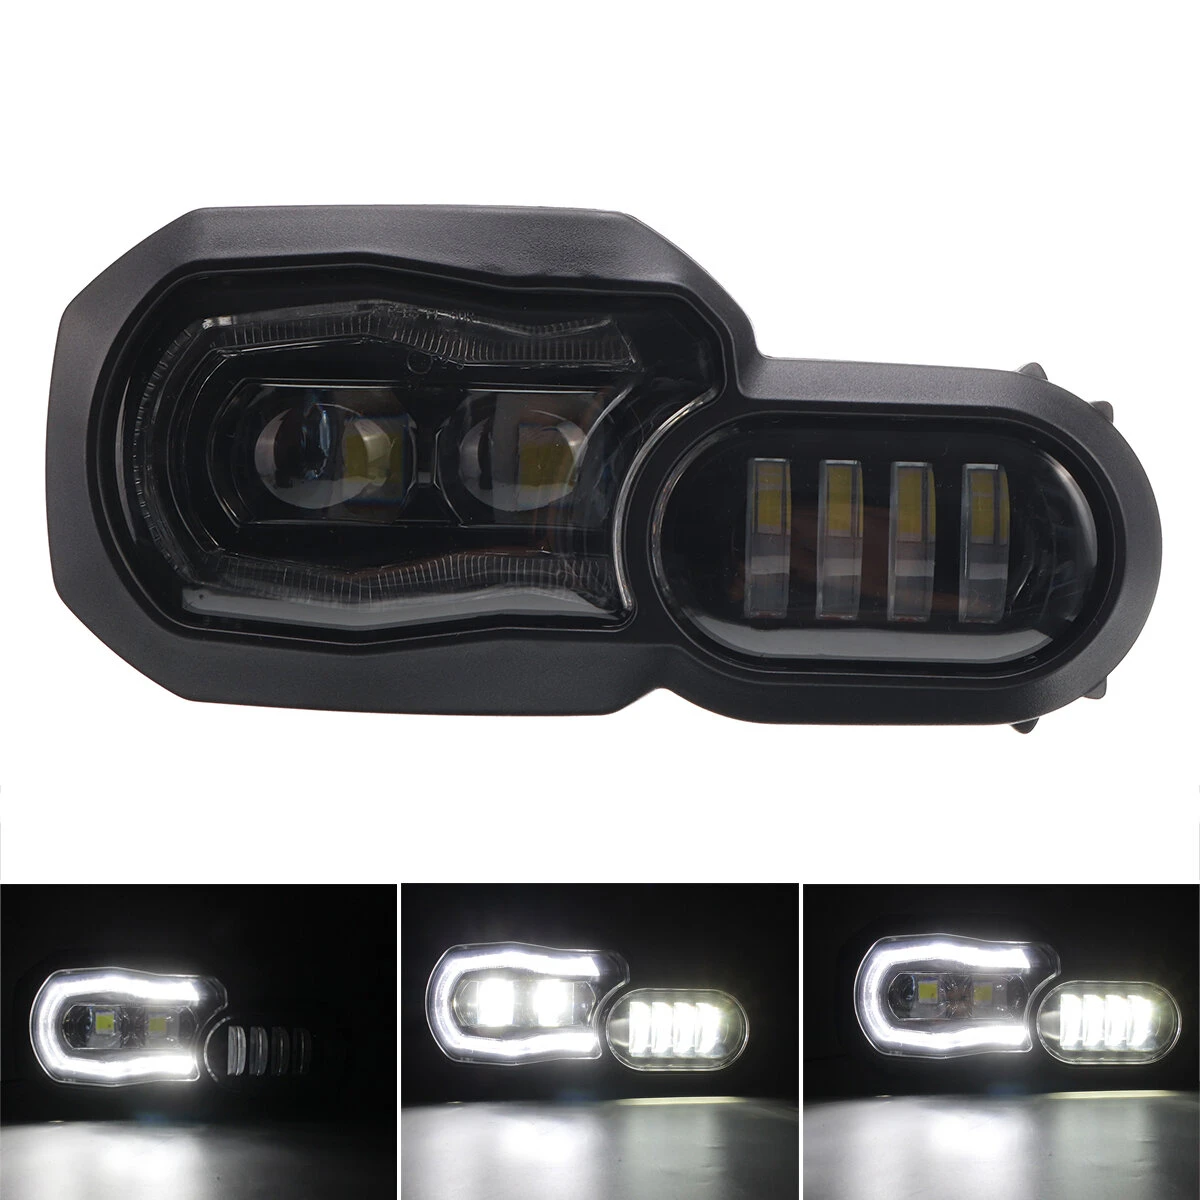 LED Headlight Headlamp For BMW F700GS F800GS ADV F800R F650GS 2008 2018 Adventure